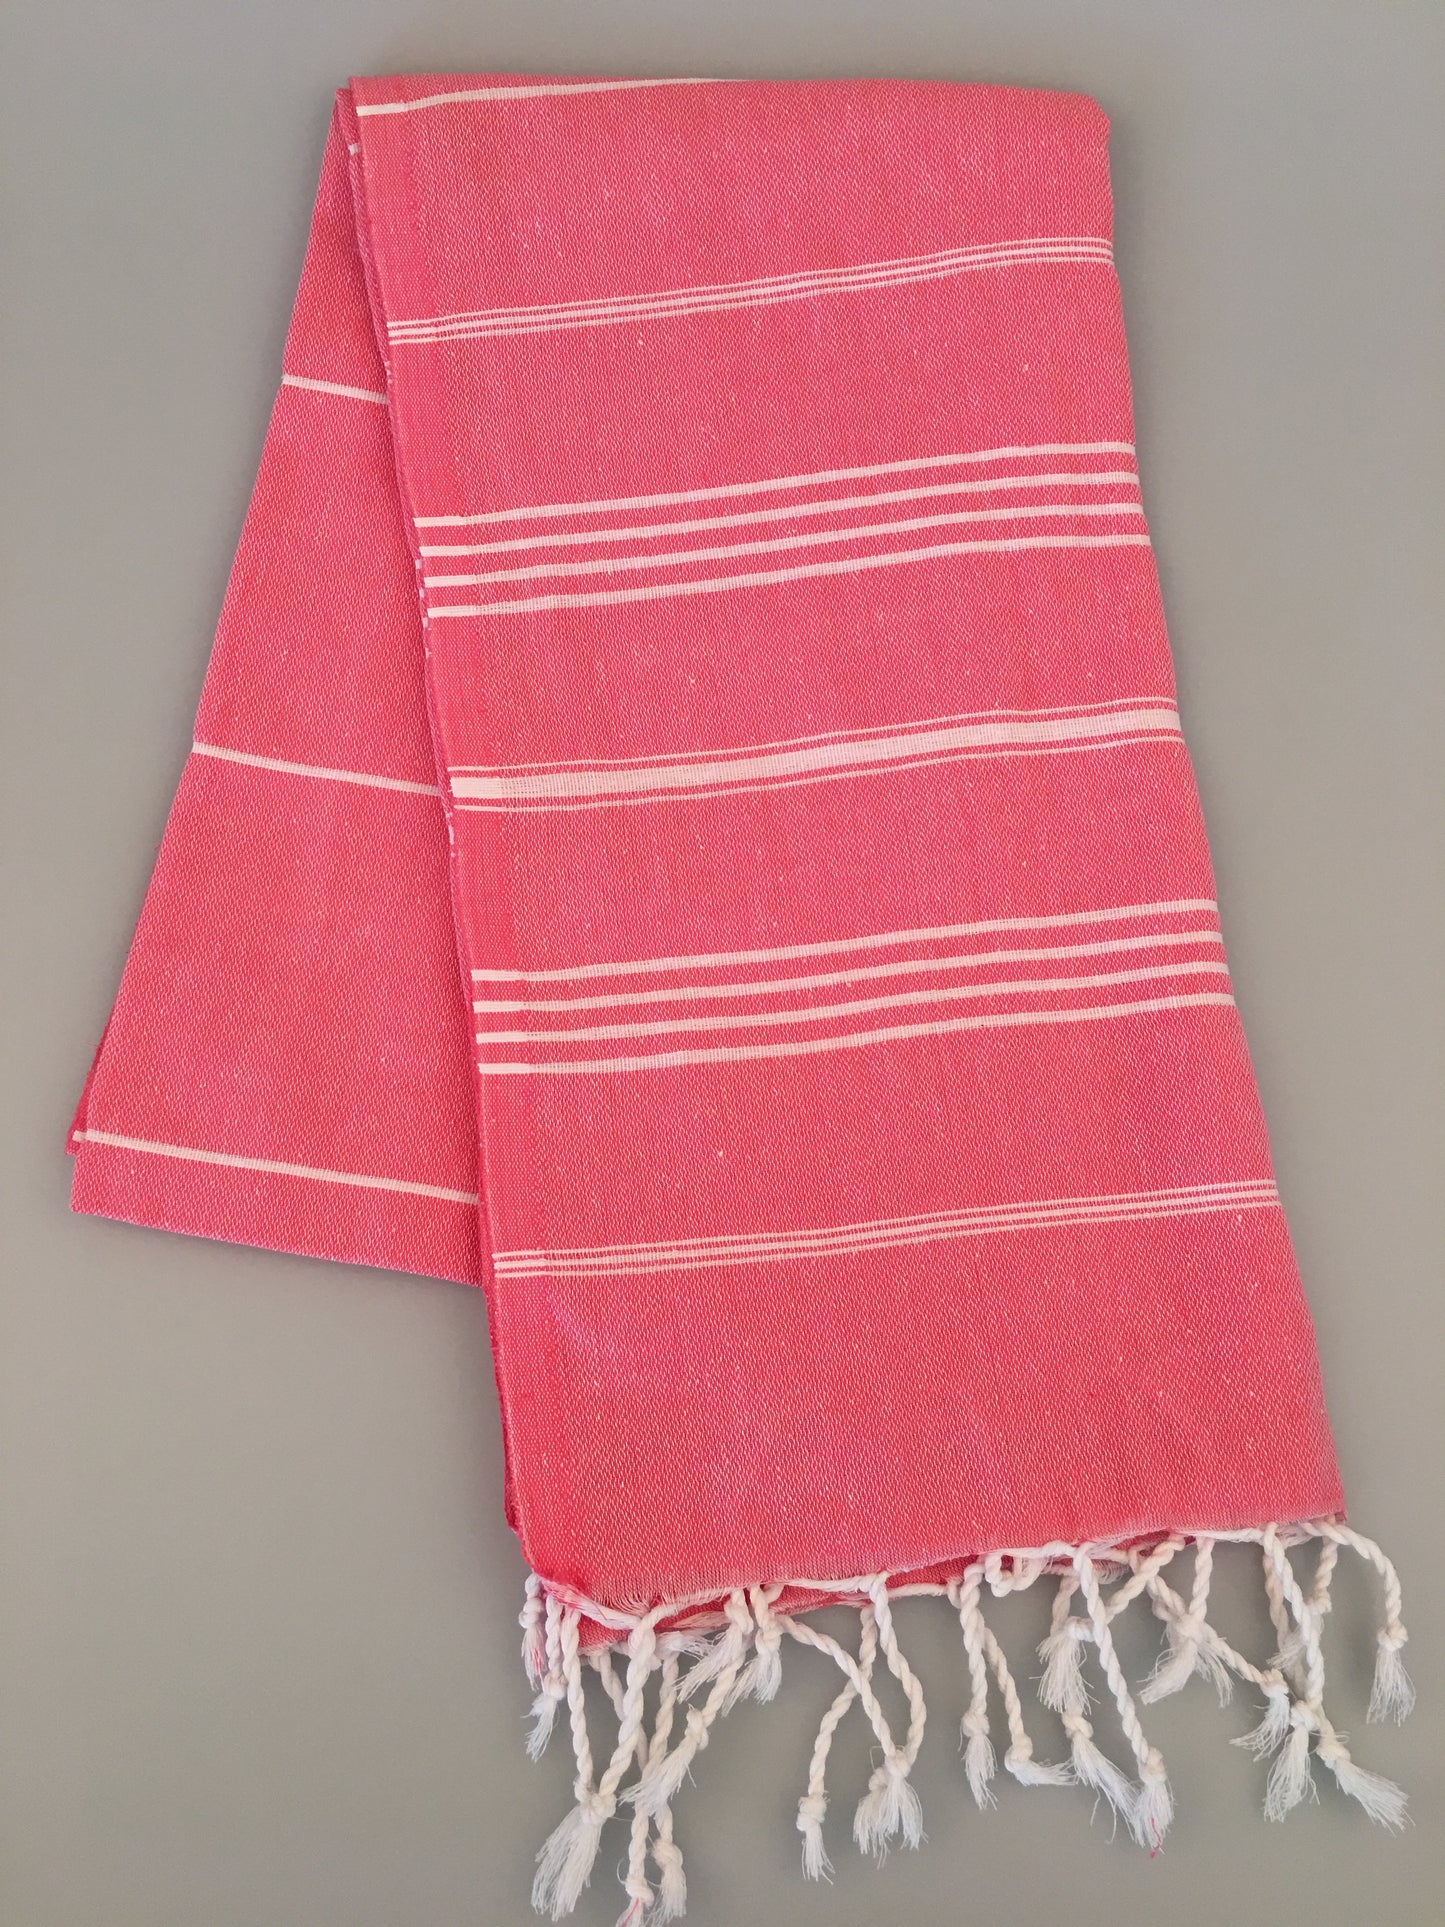 200pcs/LOT Aphrodisias Sultan Turkish Towel Peshtemal (270g) - Wholesale Price